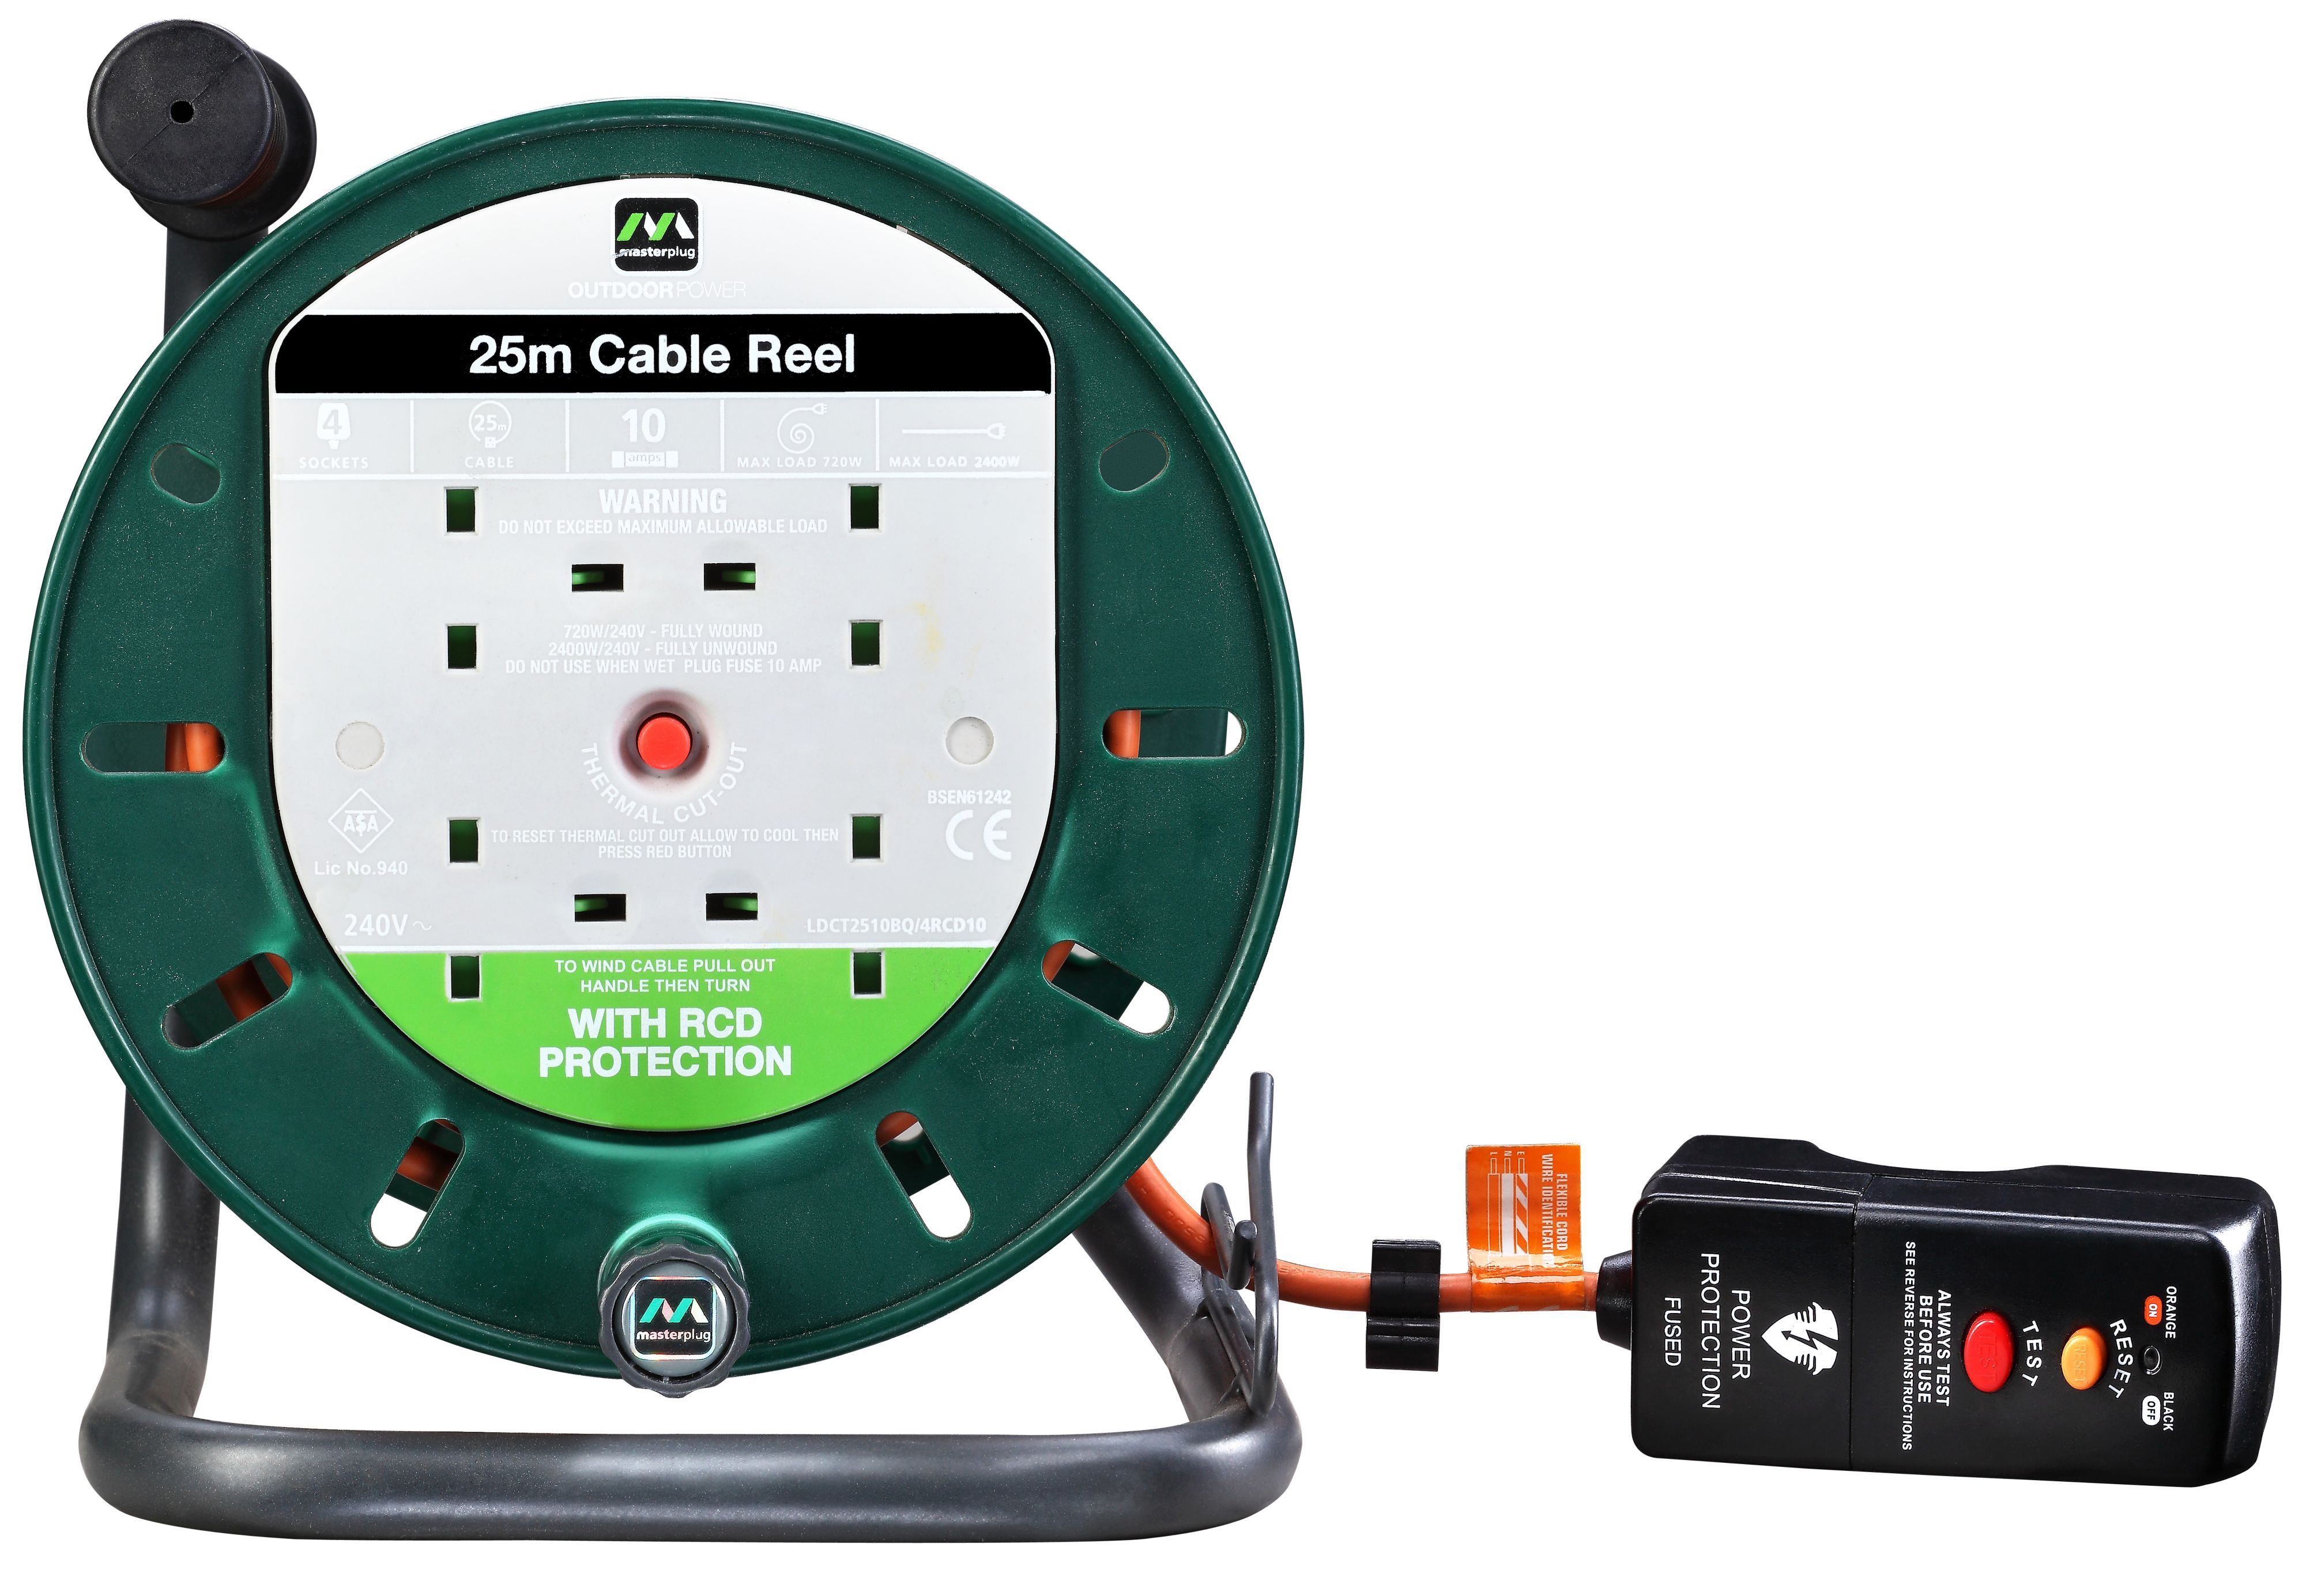 Masterplug 4 socket Green & orange Outdoor Cable reel, 25m